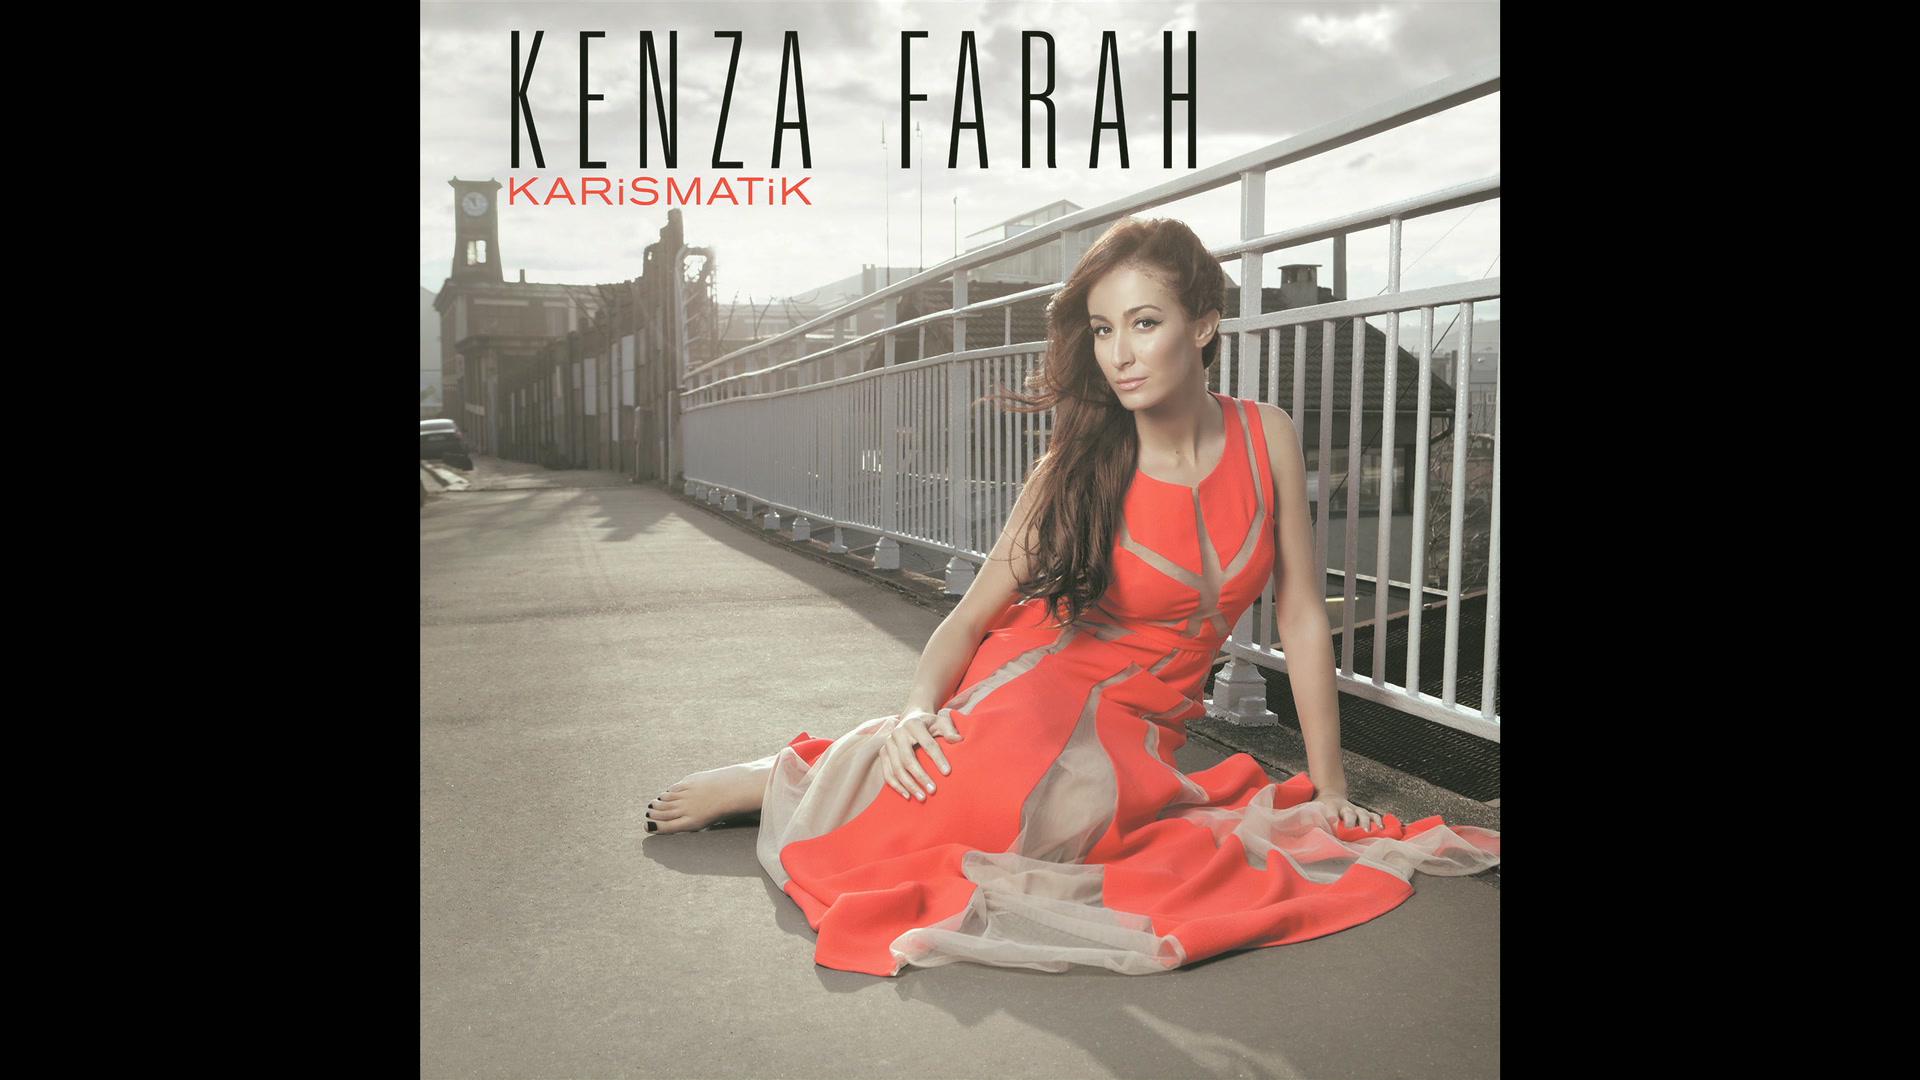 Kenza Farah - 25.01.07 (Audio)